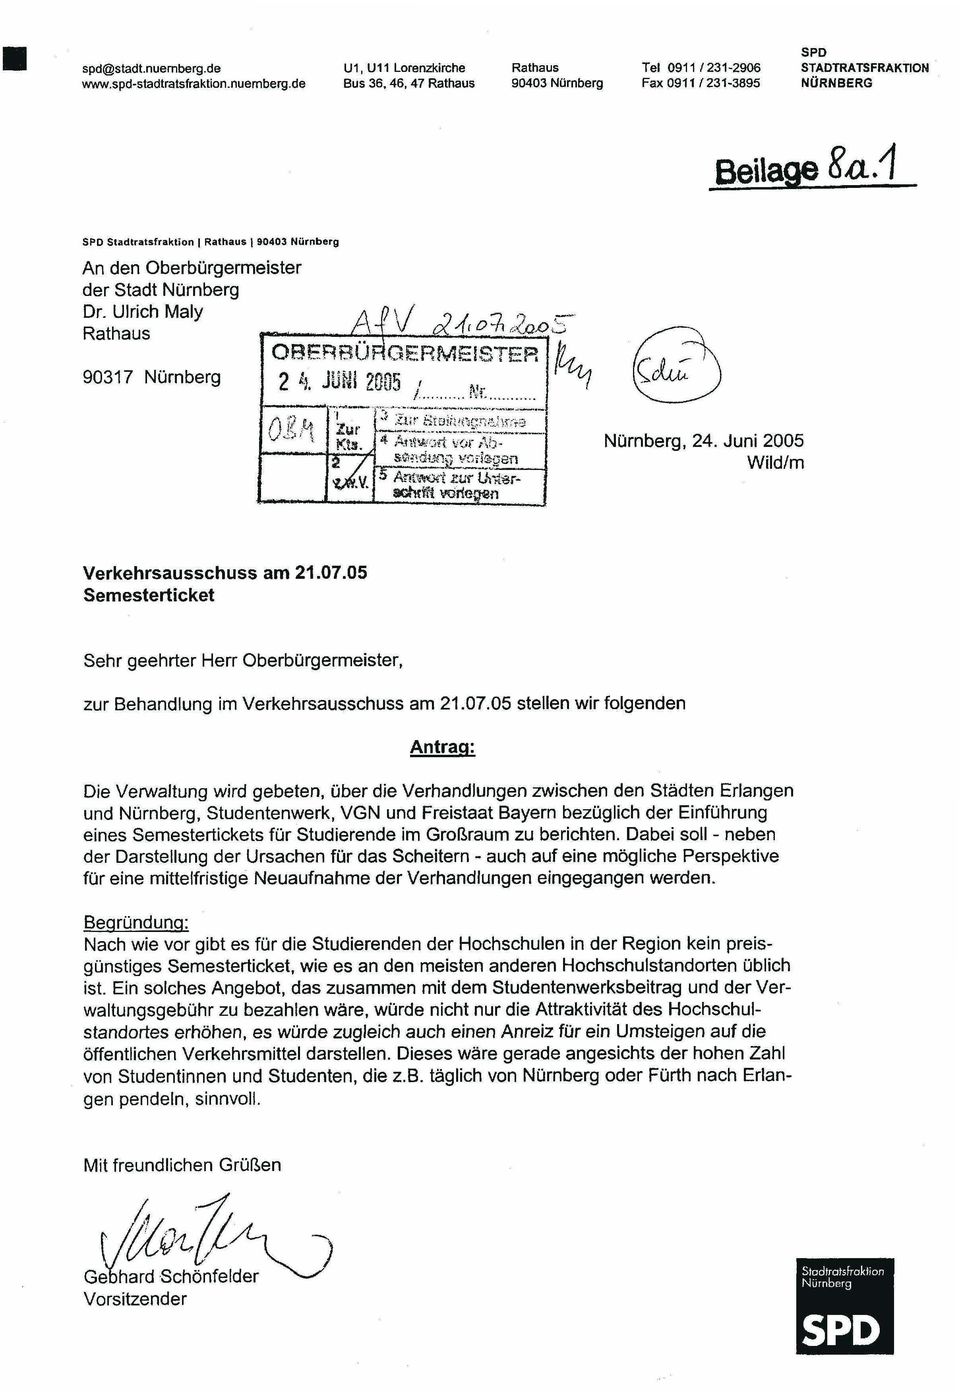 05 Semesterticket Sehr geehrter Herr Oberbürgermeister, zur Behandlung im Verkehrsausschuss am 21.07.